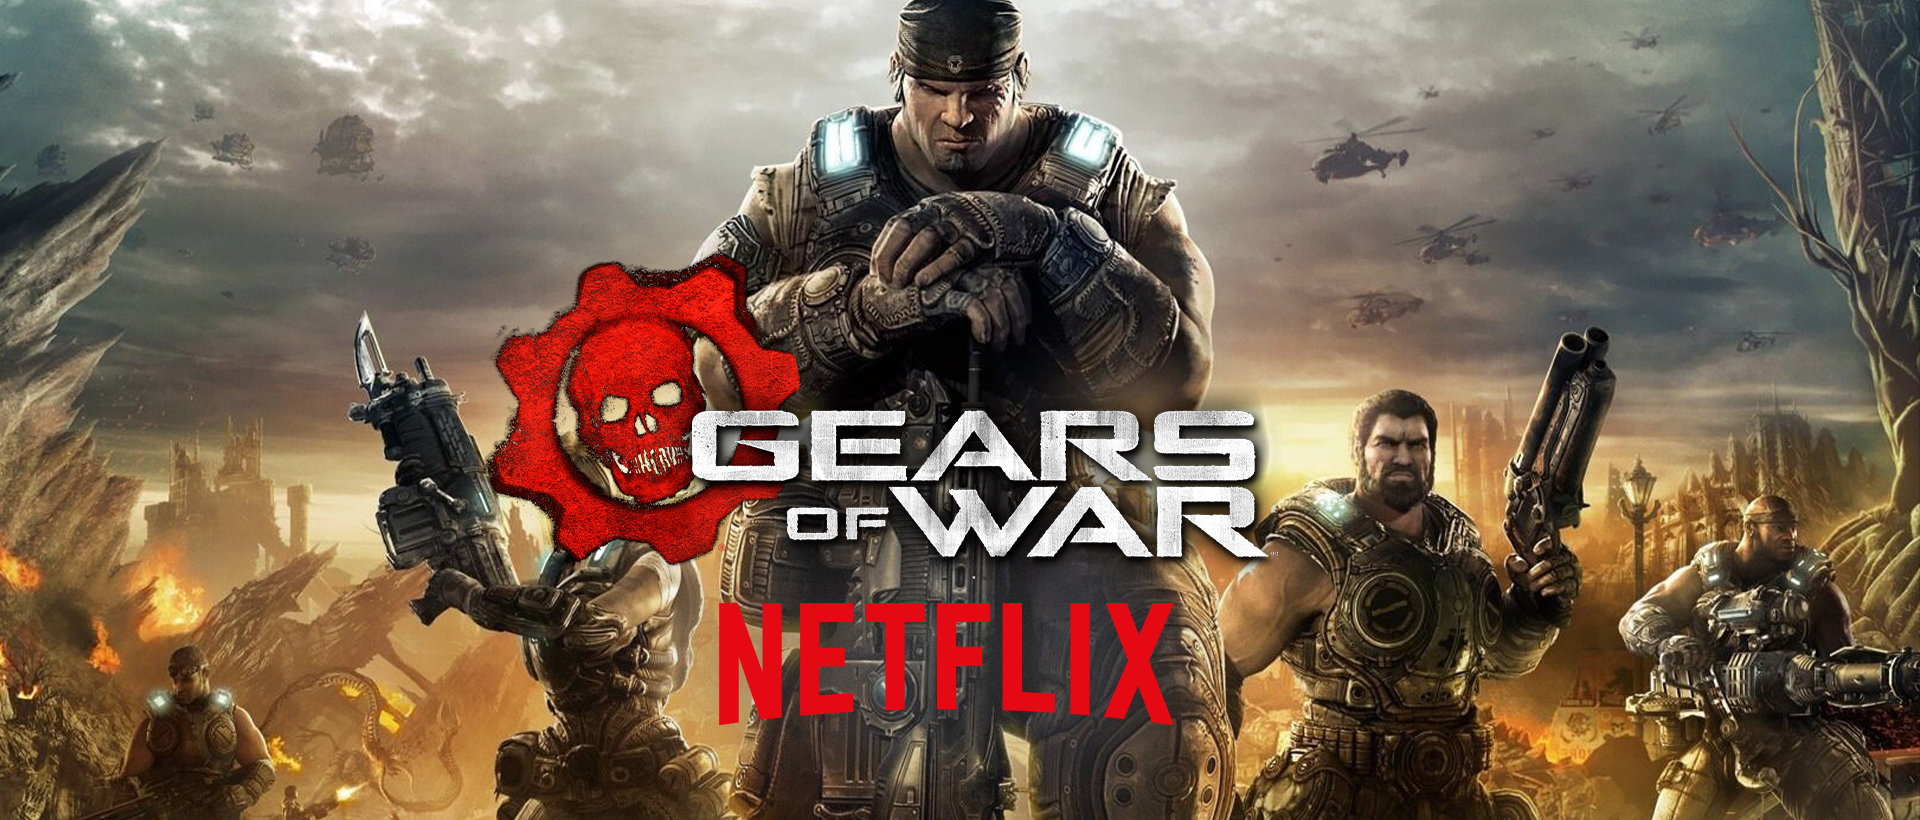 Netflix Puts 'Gears of War' Feature Film Into Early Development - Knight  Edge Media